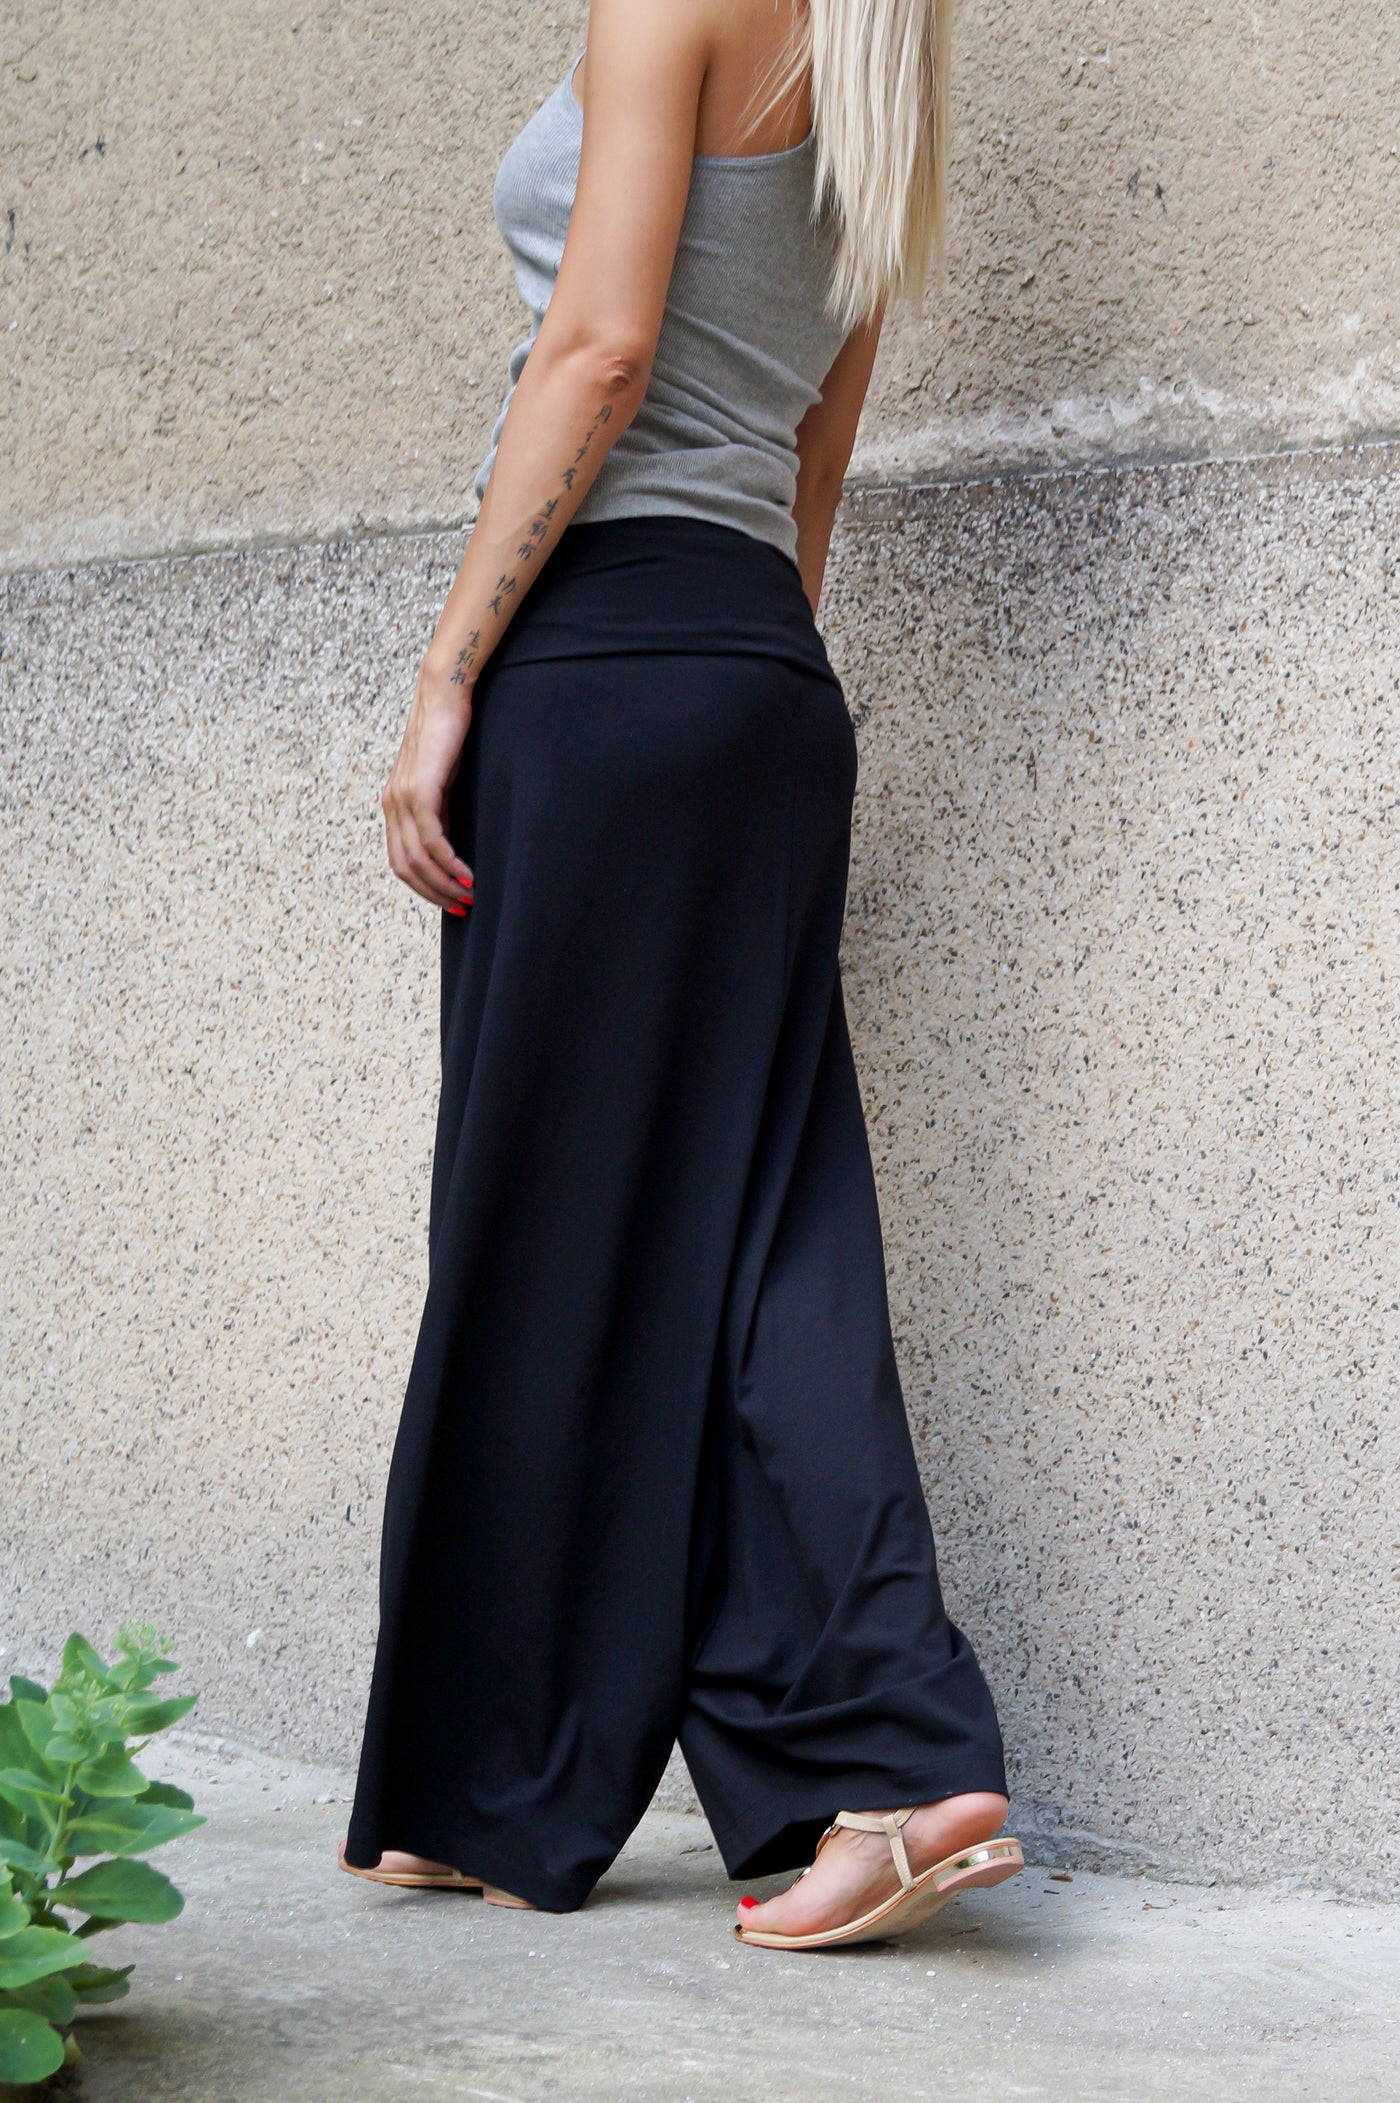 Black loose skirt pants F1482